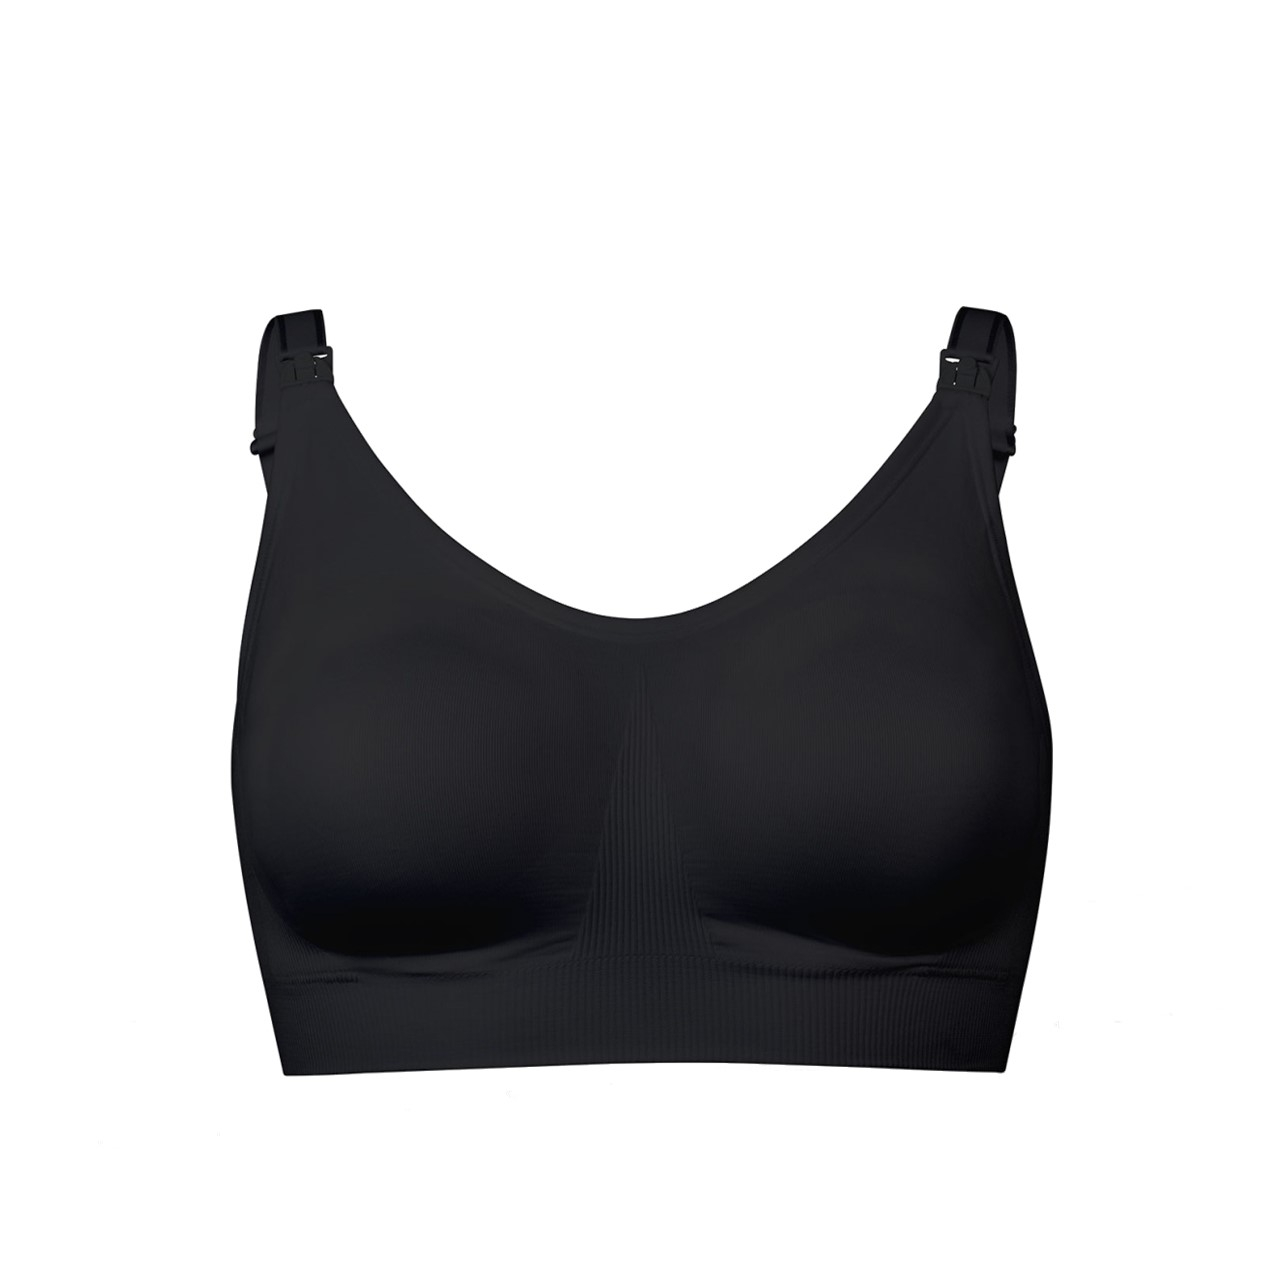 https://static.beautytocare.com/media/catalog/product/m/e/medela-ultimate-bodyfit-bra-black-medium-size-x1.jpg